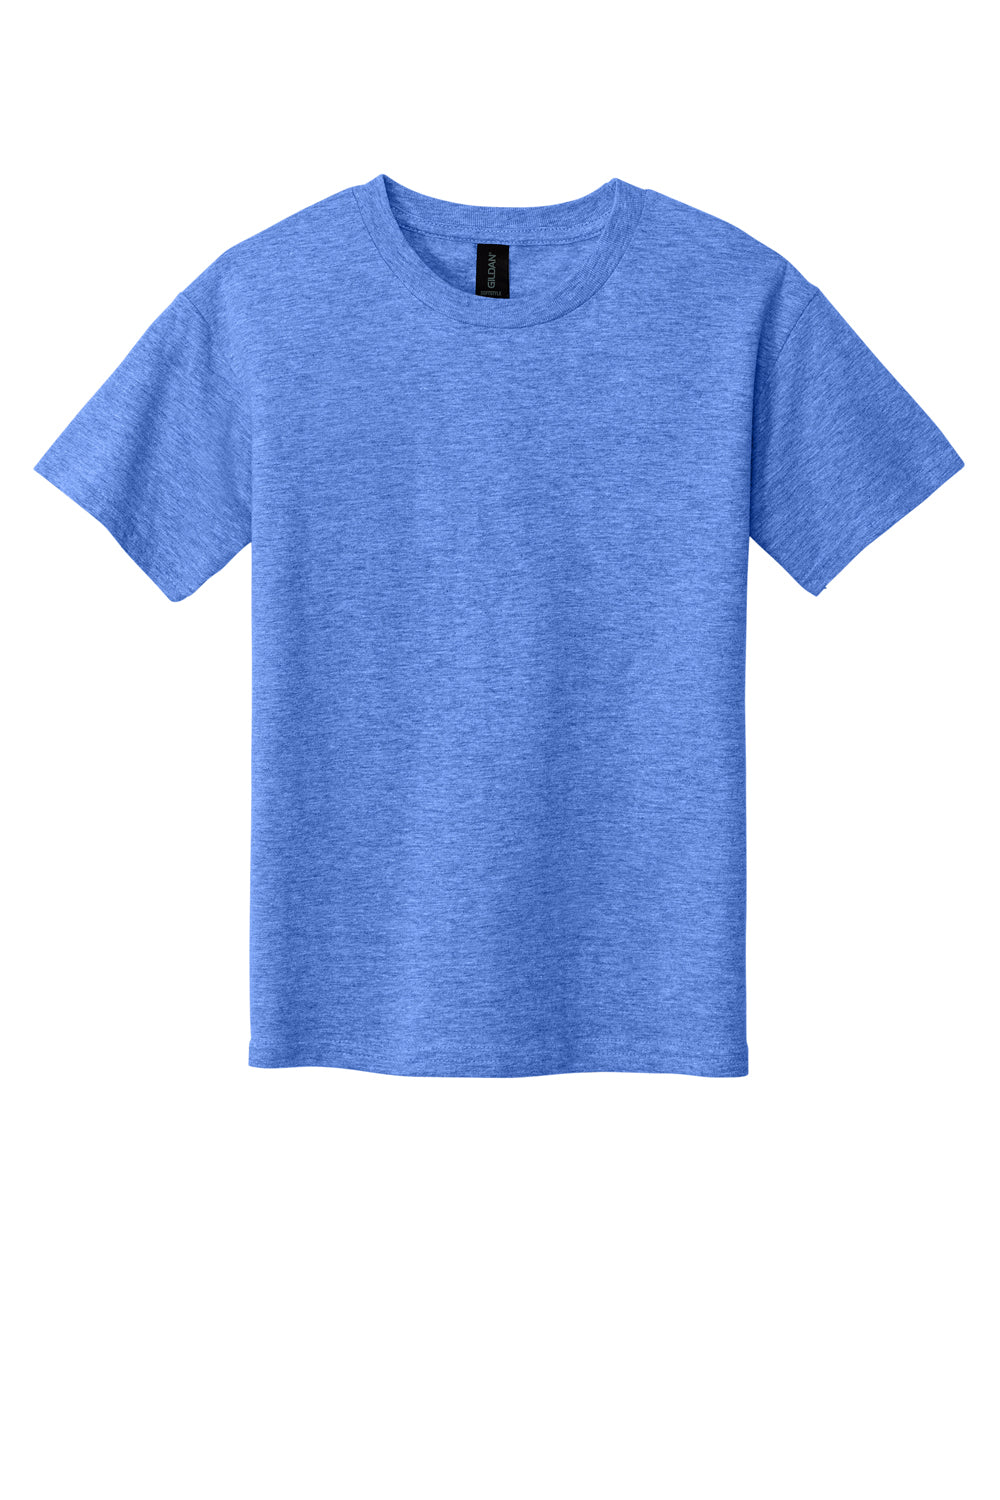 Gildan Youth Softstyle Short Sleeve Crewneck T-Shirt Heather Royal Blue Flat Front